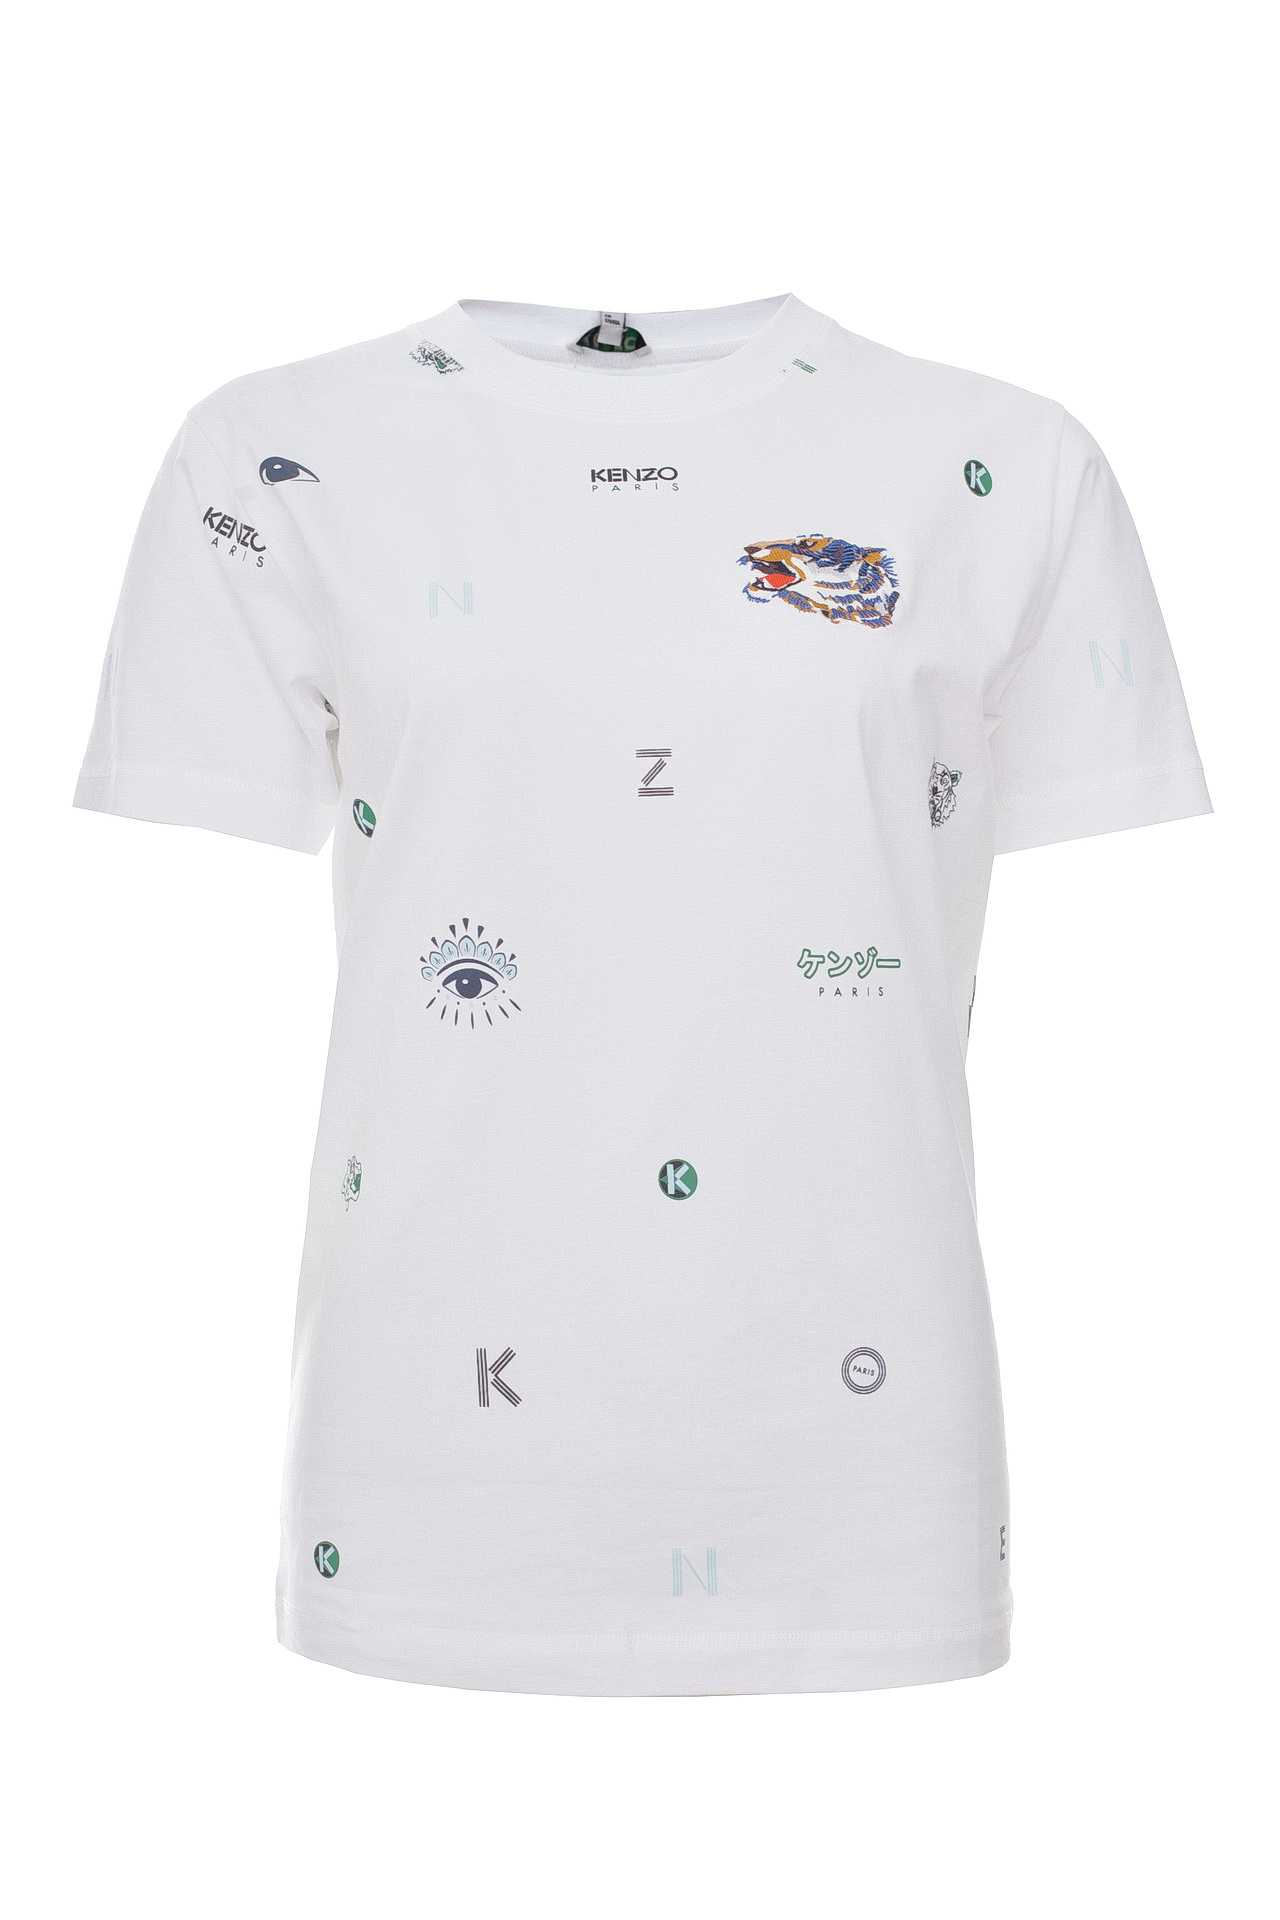 Одежда женская Футболка KENZO (F855TS0064YH/18.2). Купить за 11900 руб.